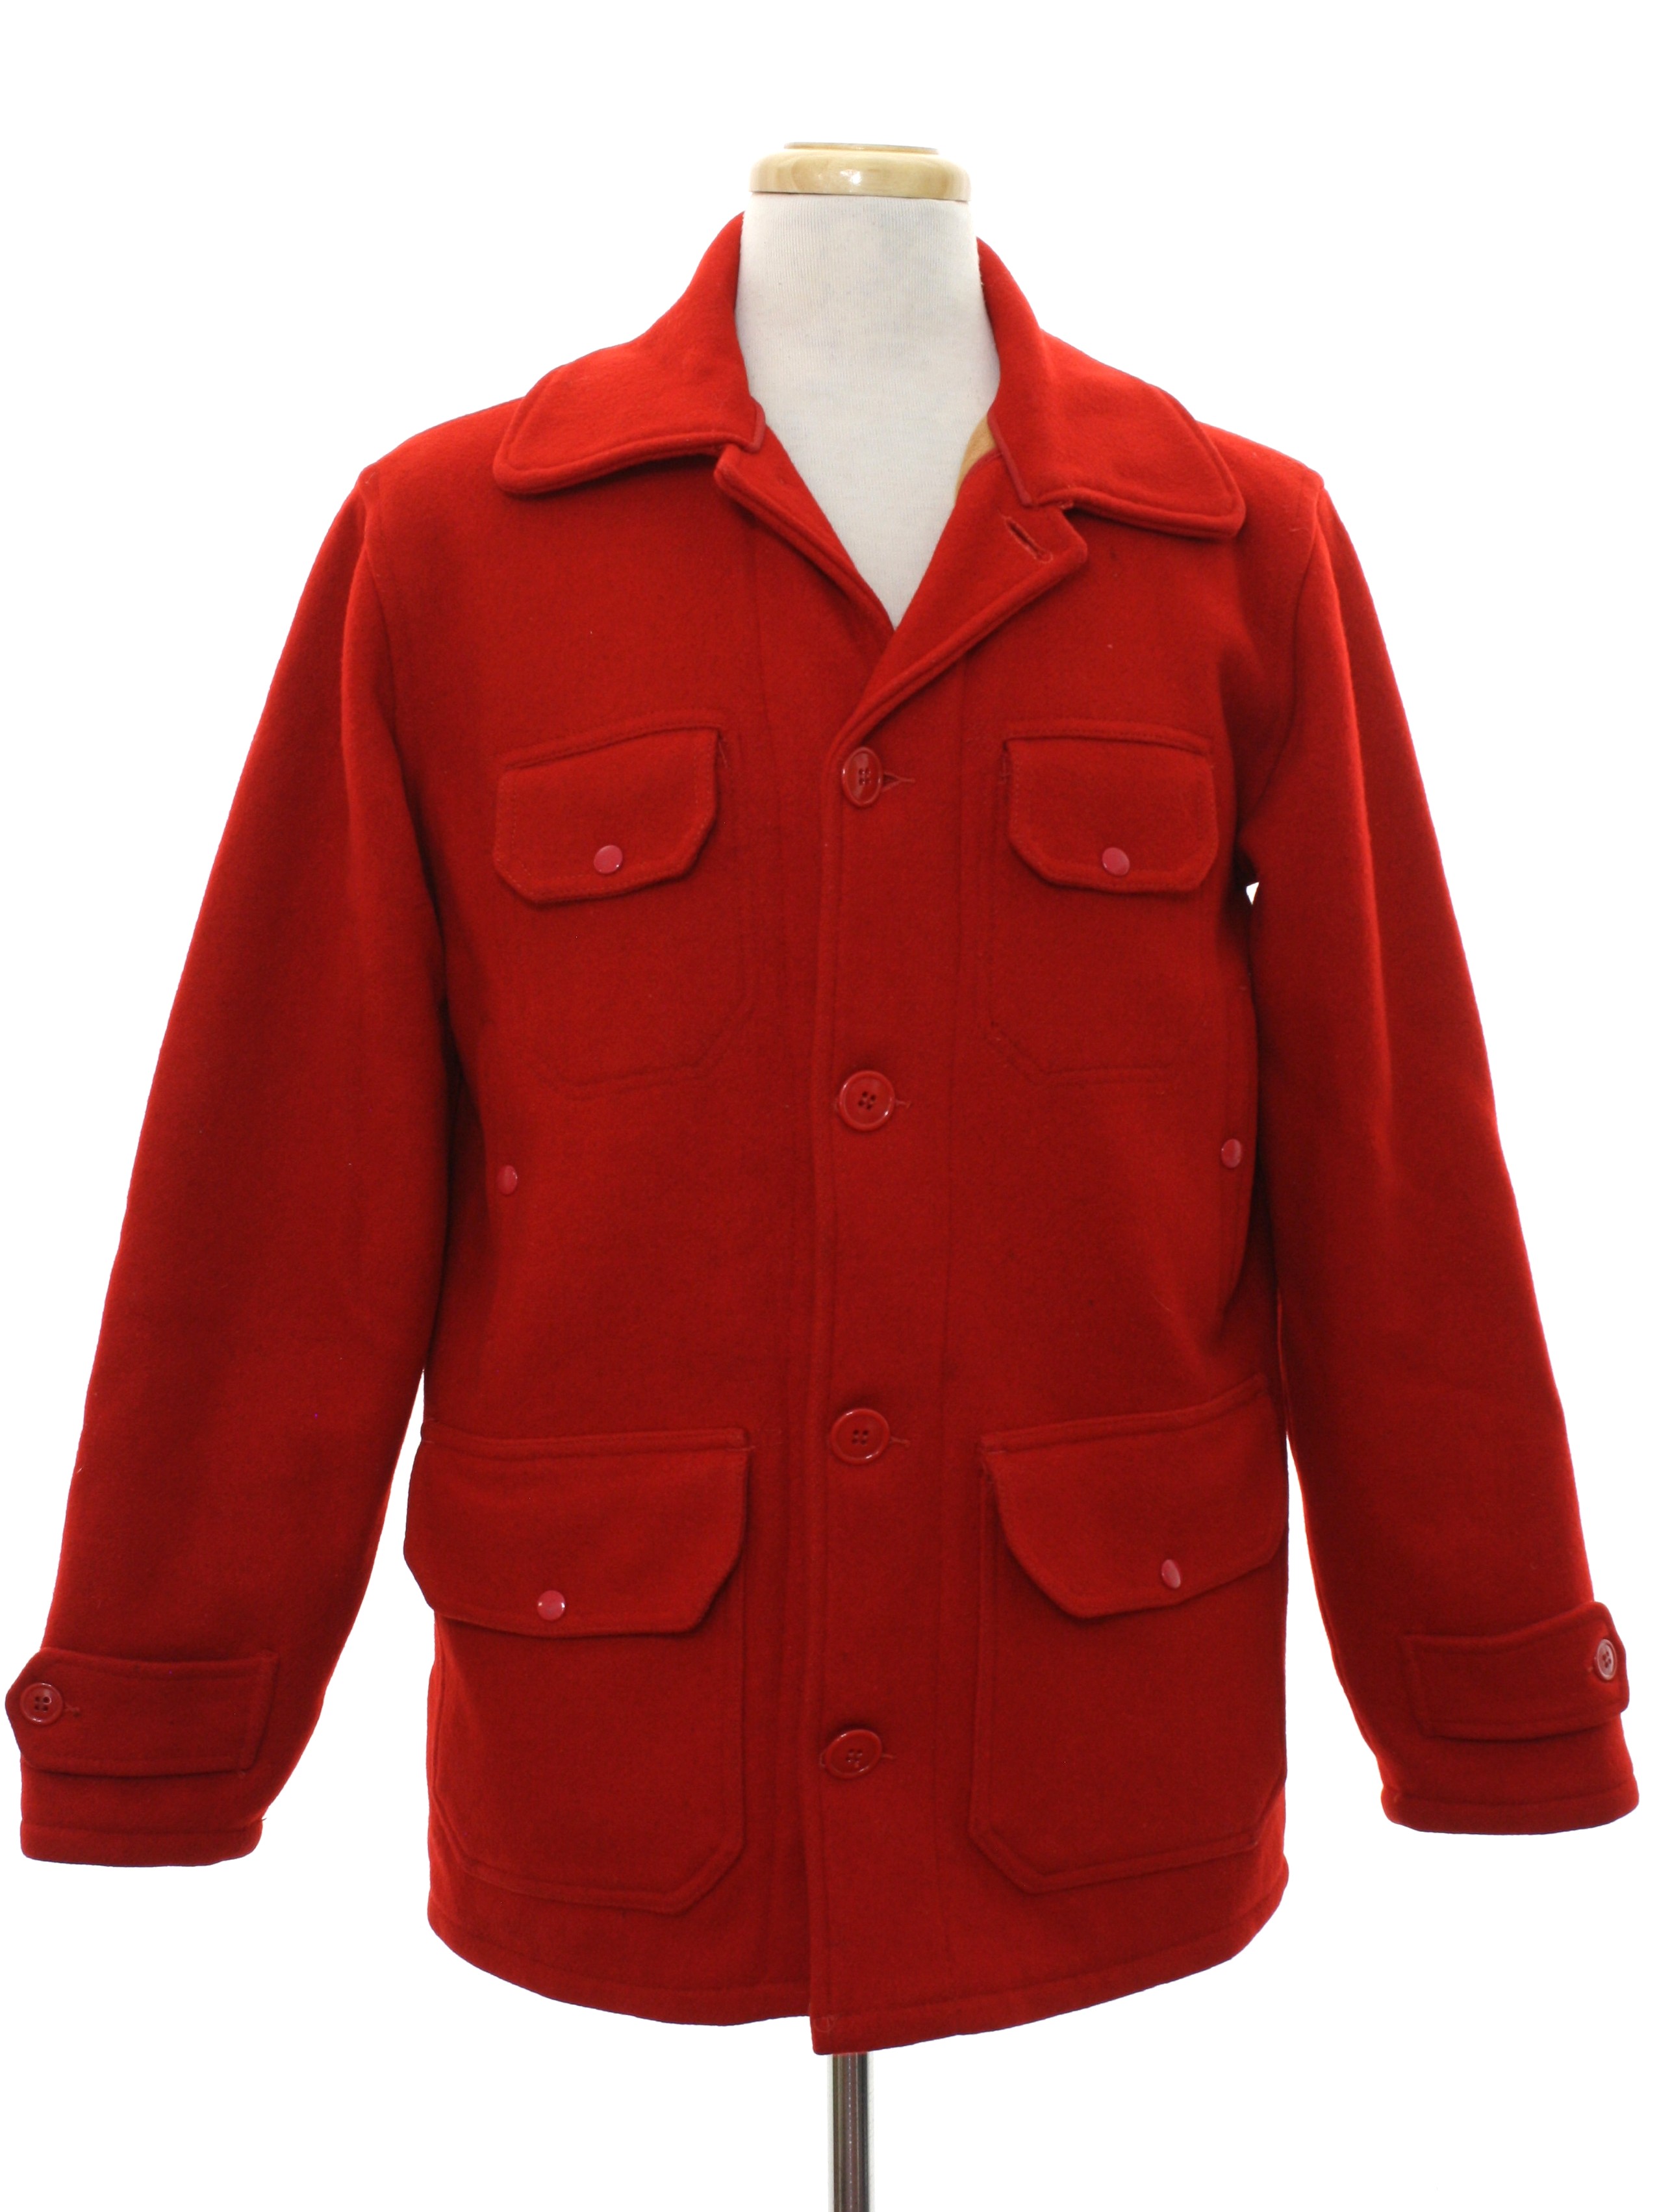 60s Retro Jacket: 60s -Johnson Woolen Mills- Mens red background wool ...